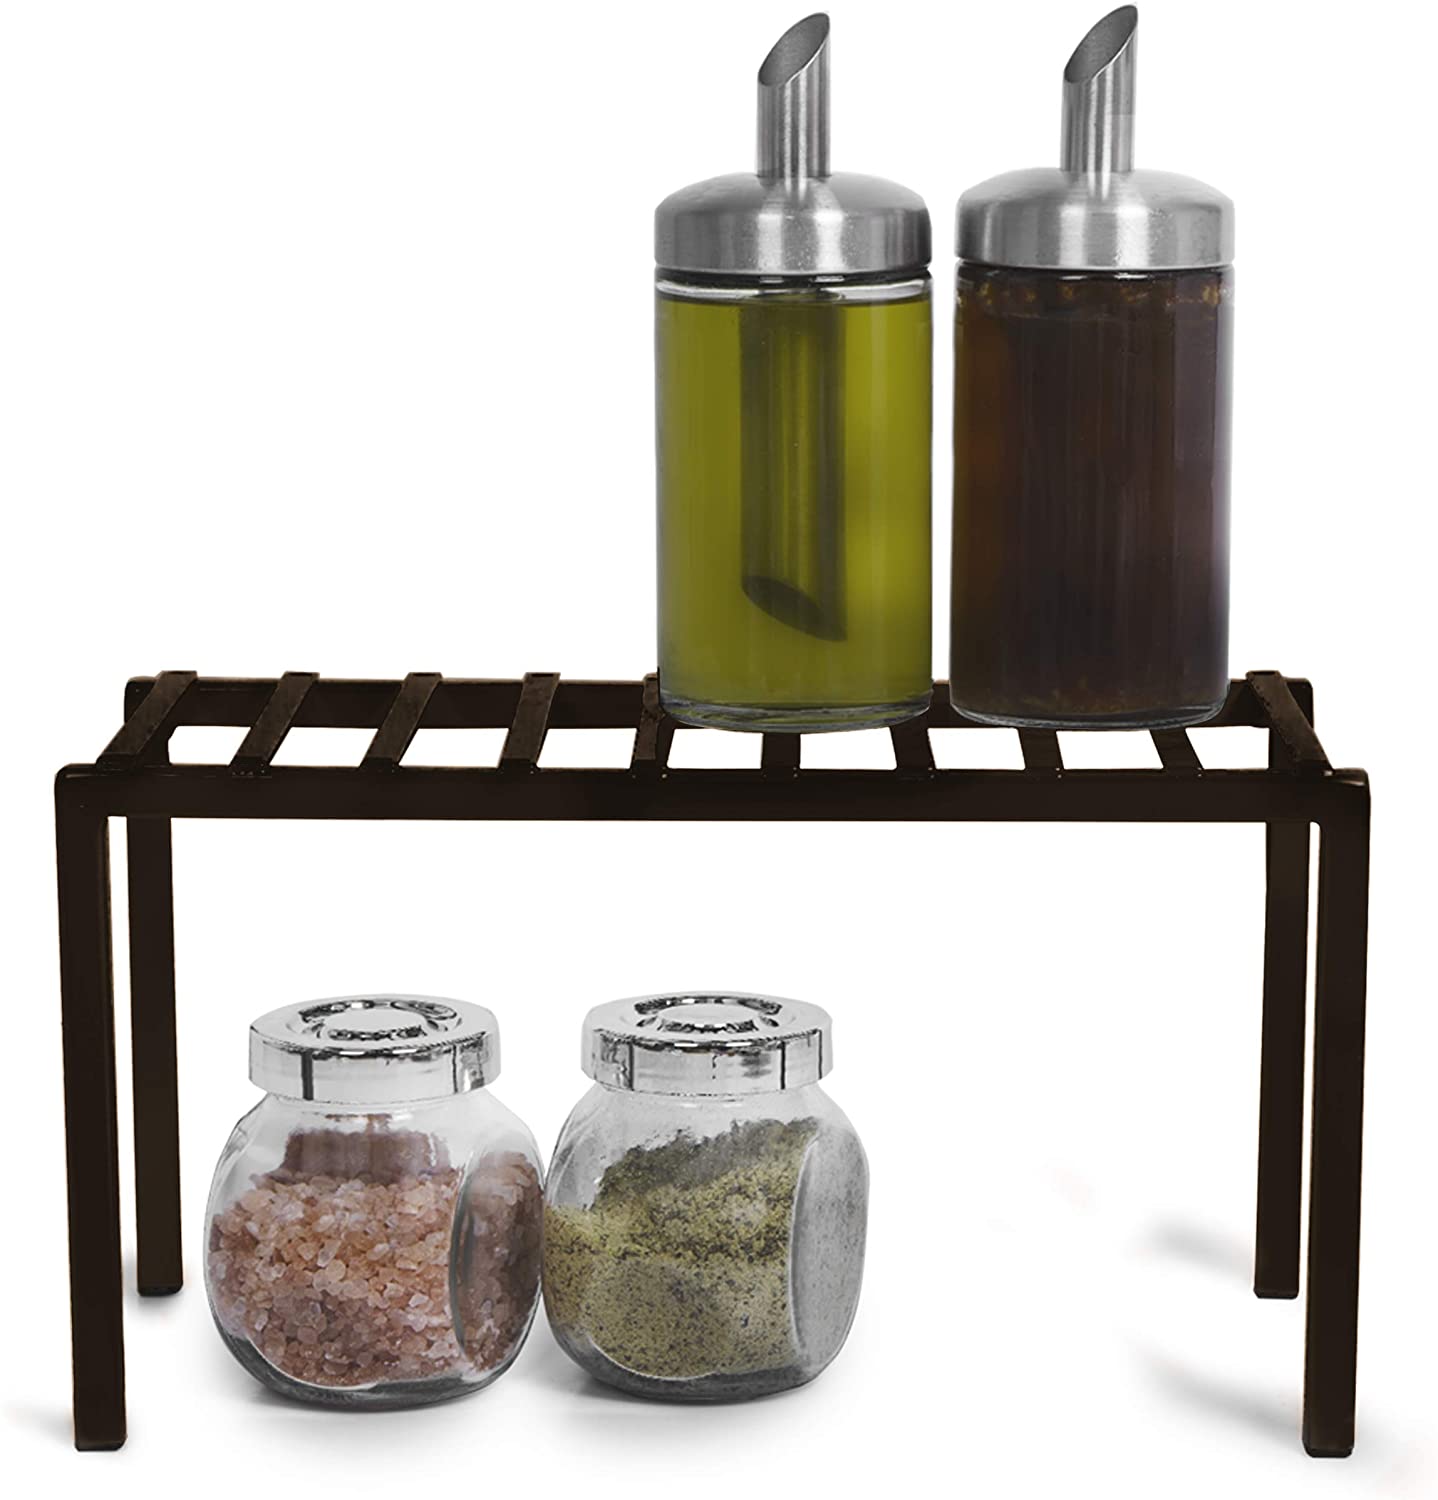 Smart Design Premium Cabinet Storage Shelf - Small (10.63 x 5.25 Inch) - Steel Metal Frame - Rust Resistant Coating - Cup, Dish, Counter & Pantry Organization - Kitchen [Bronze]